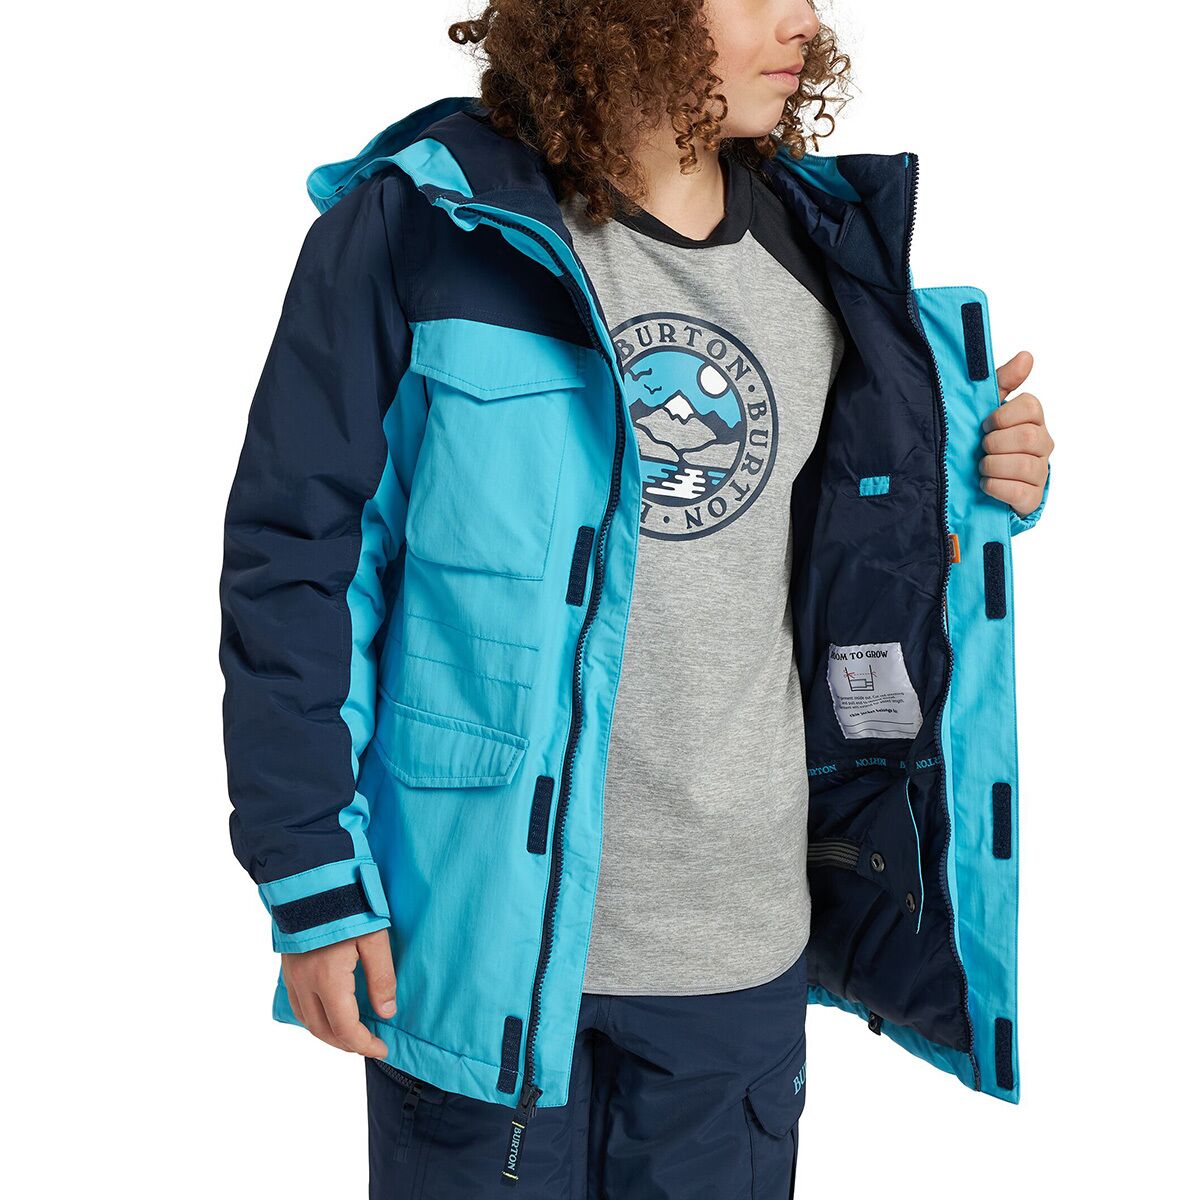 Details about   Burton Boys Covert Jacket Children Snowboard Jacket Ski Jacket Winter Function 